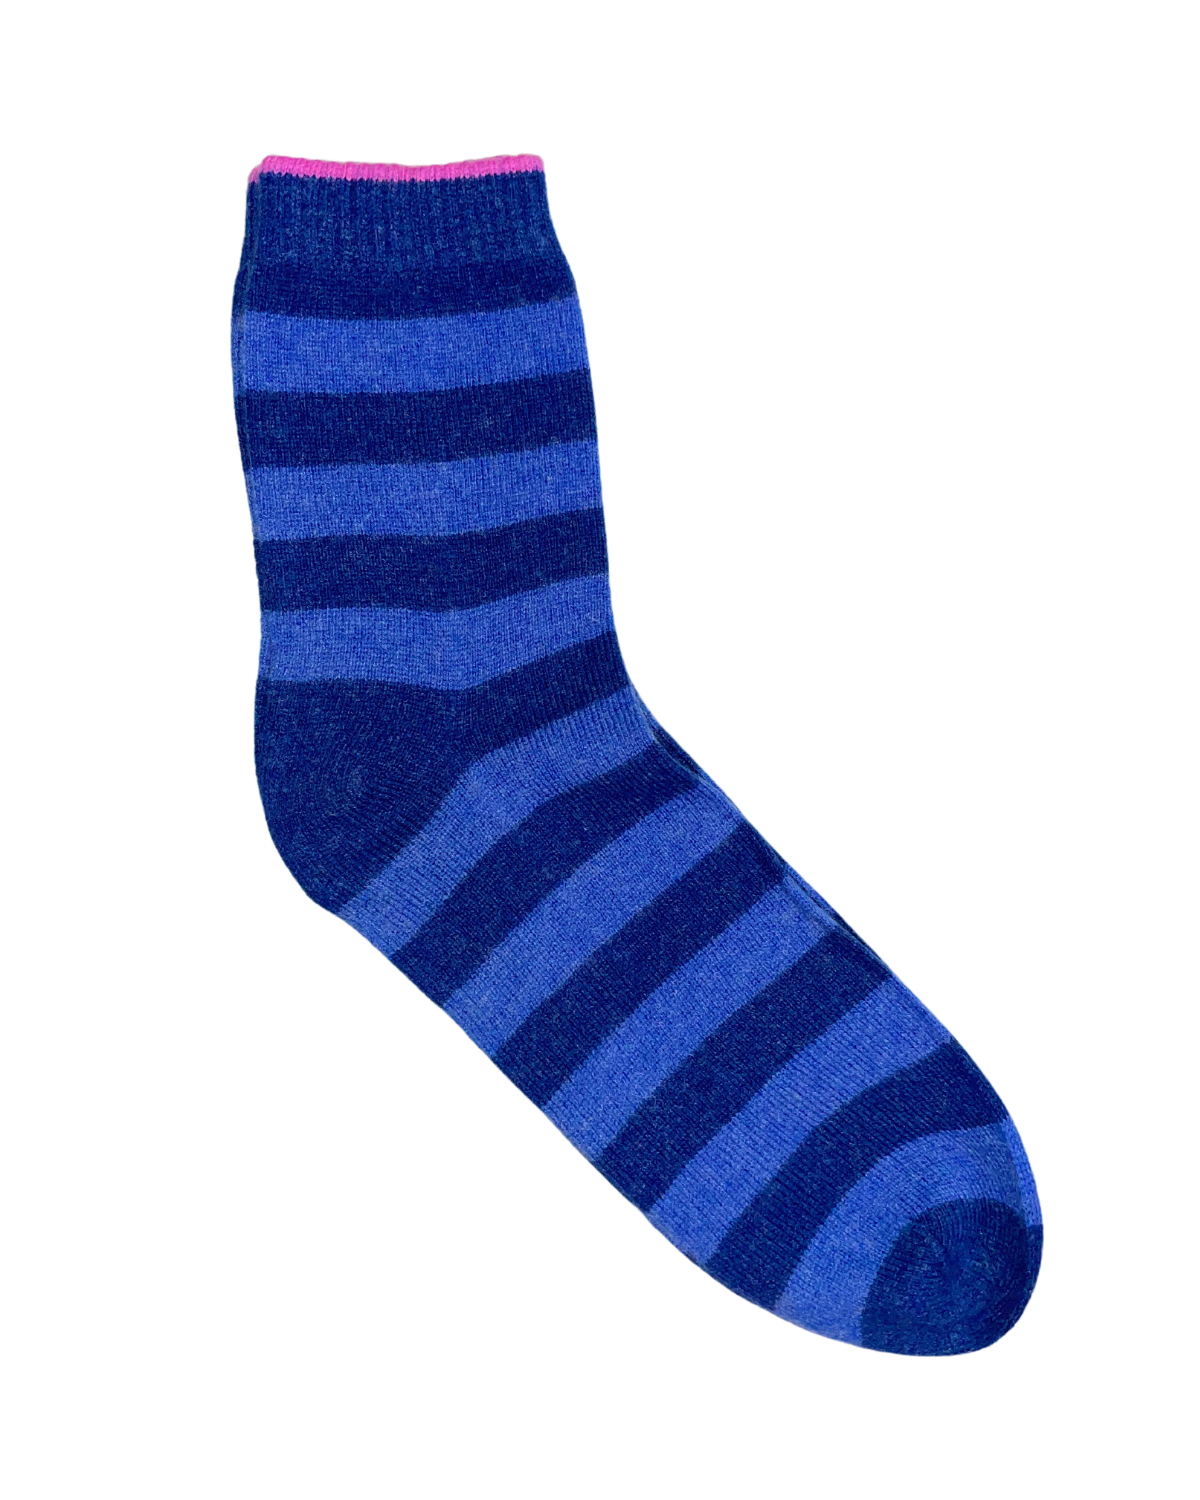 Stripe Socks (Navy/Buff)